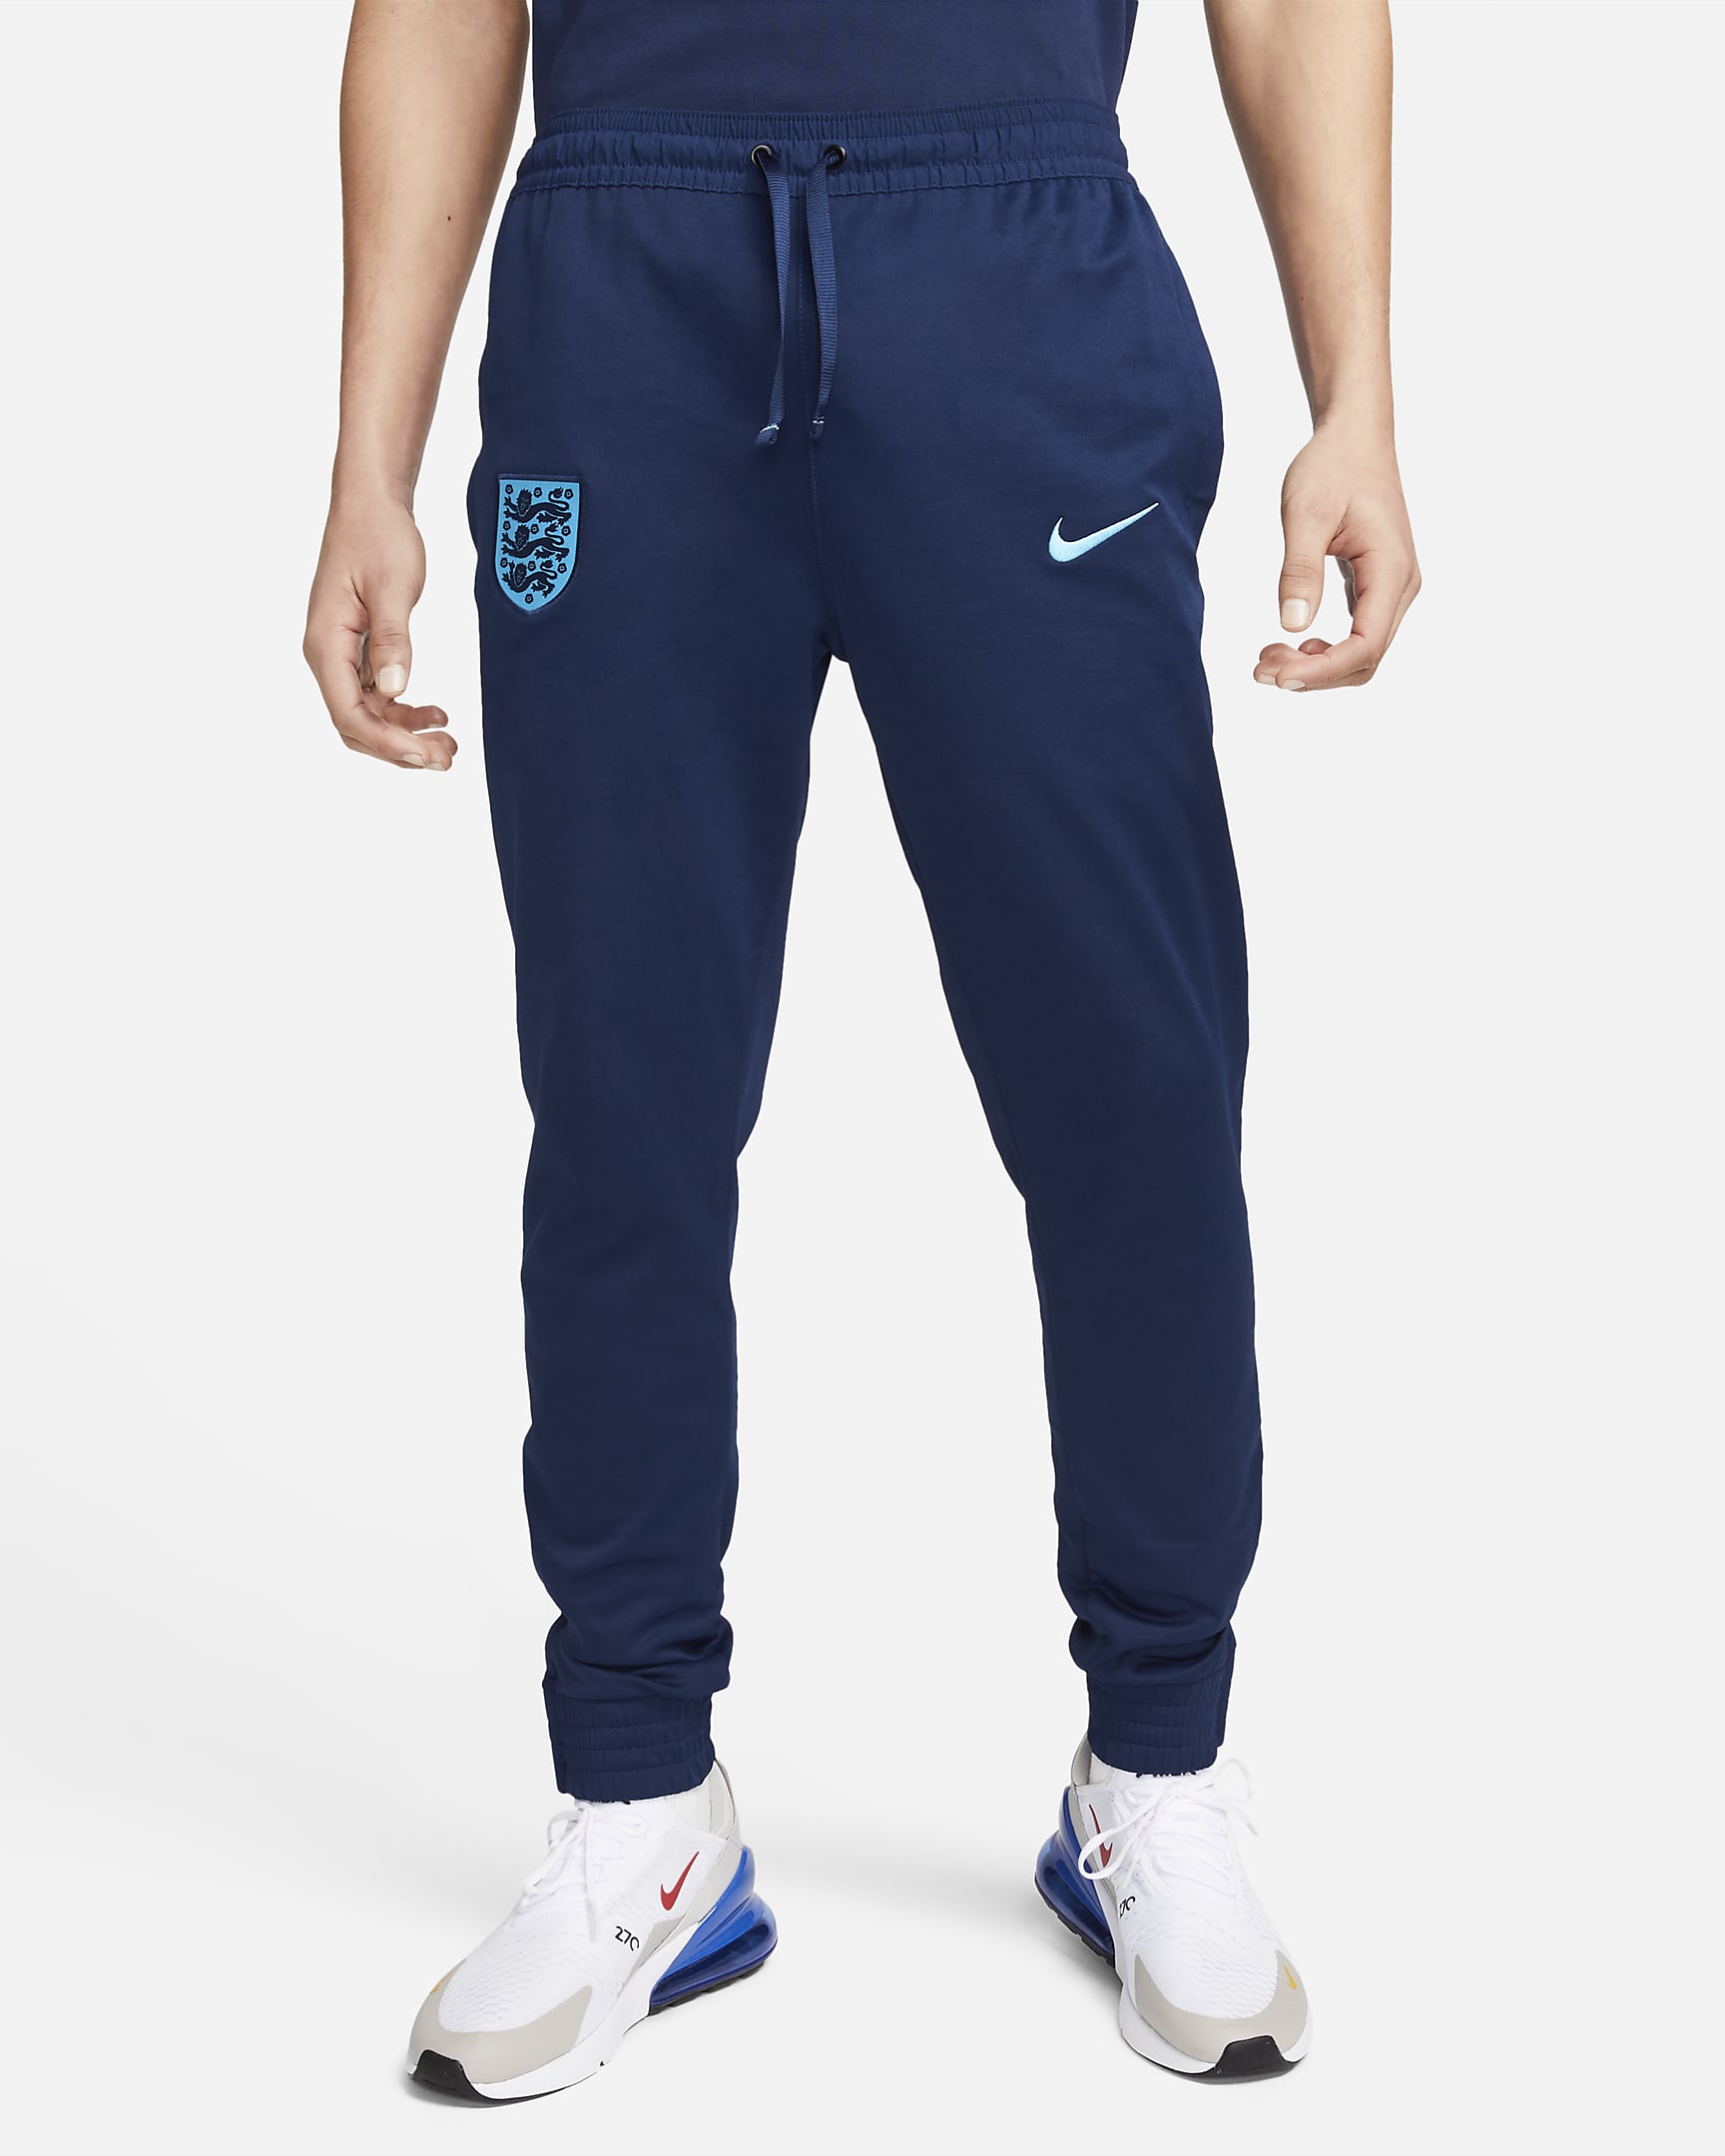 England Men's Knit Football Pants. Nike IL